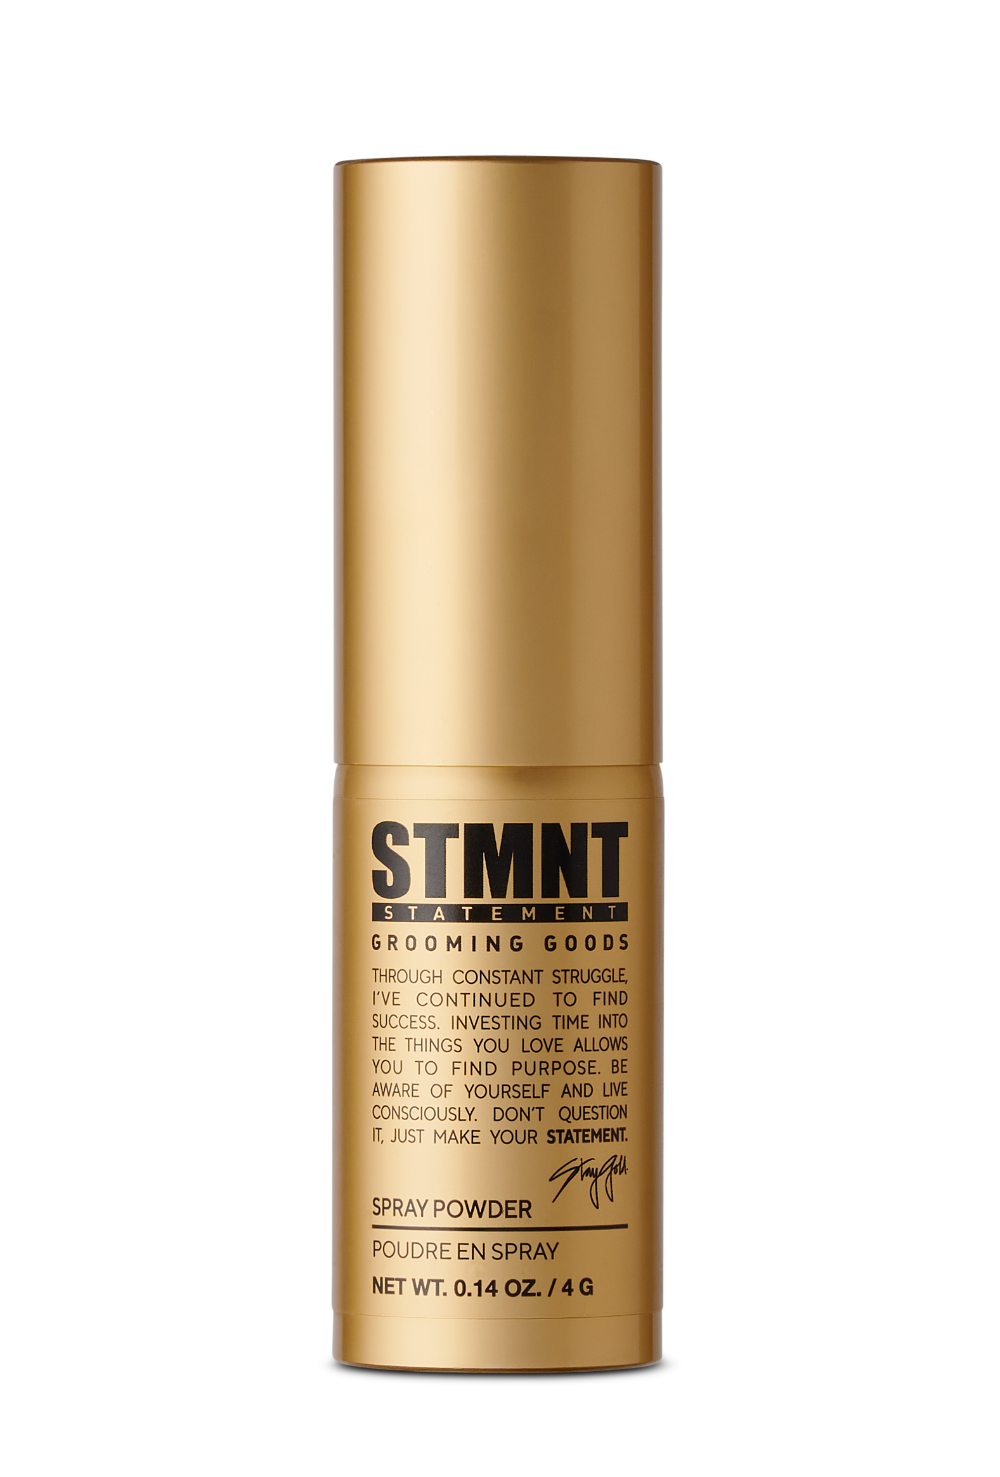 STMNT Grooming Goods Spray Powder 4g - Salon Warehouse